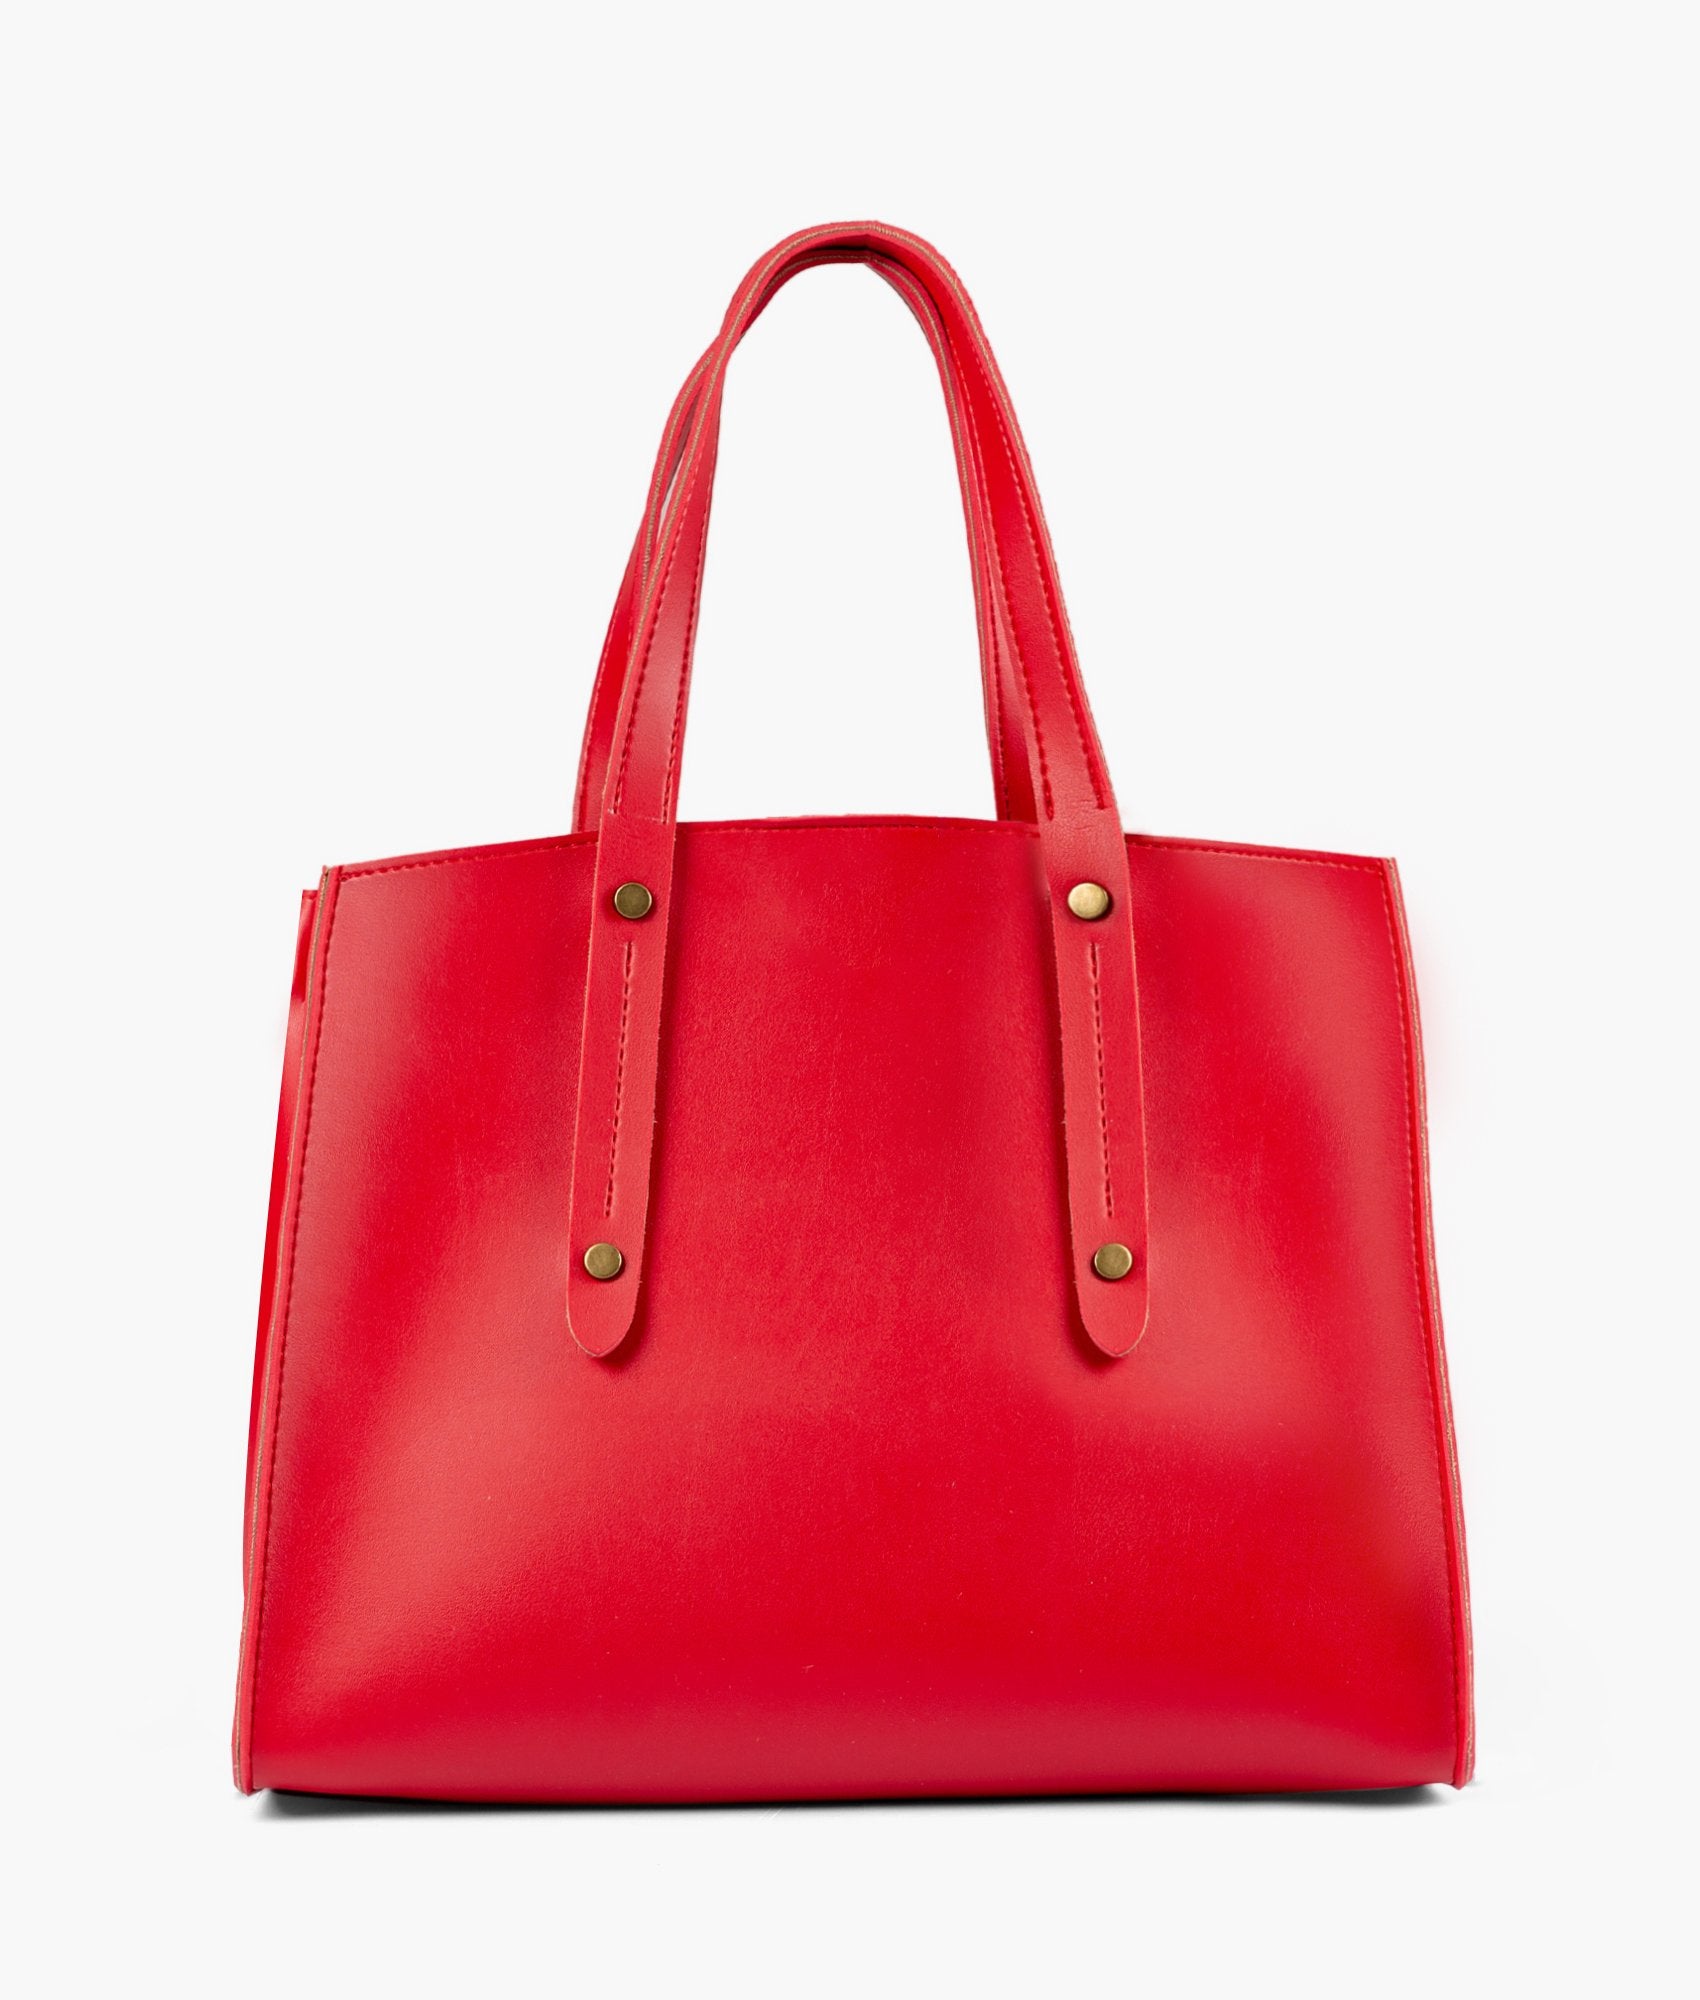 Red multi compartment satchel bag